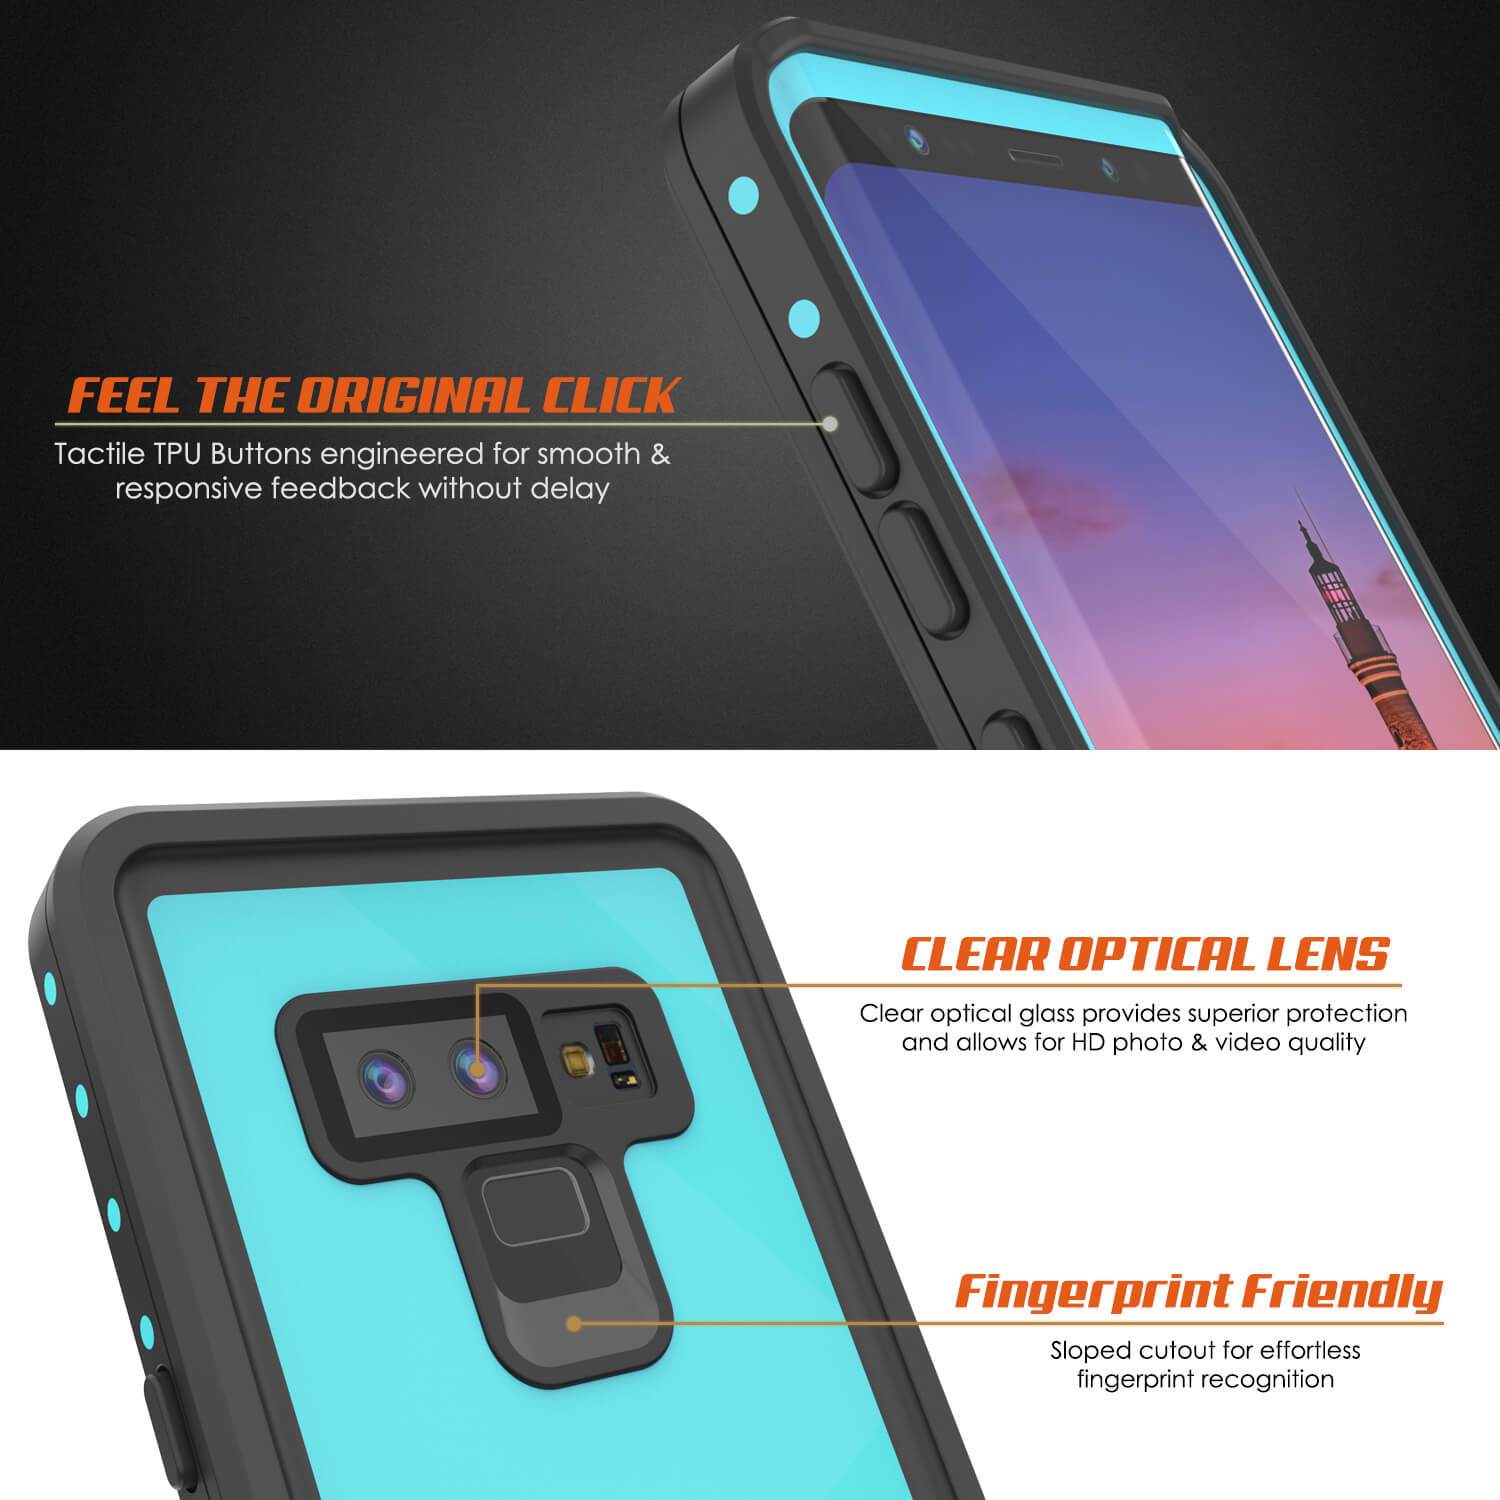 Galaxy Note 9 Waterproof Case PunkCase StudStar [Teal] Thin 6.6ft